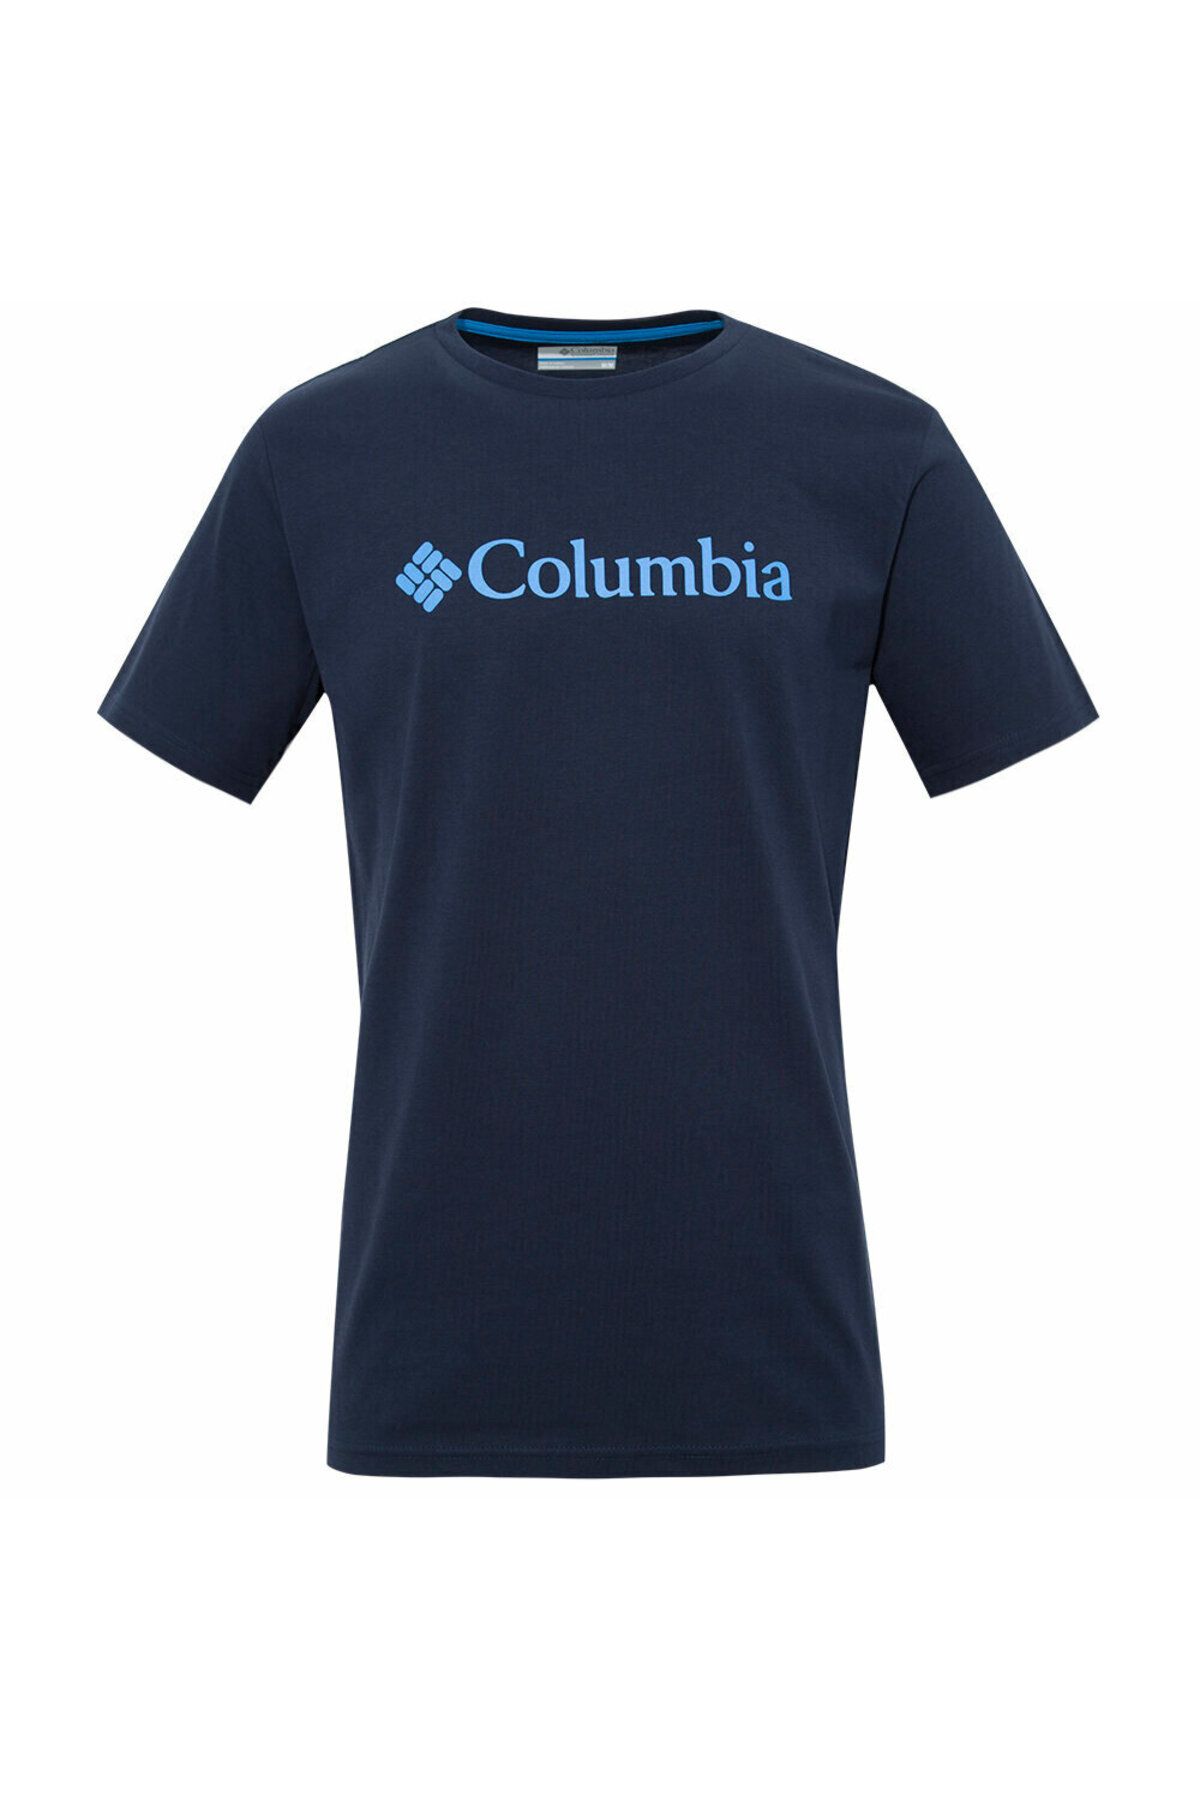 Columbia Erkek Mavi T-shirt 1680050466-466